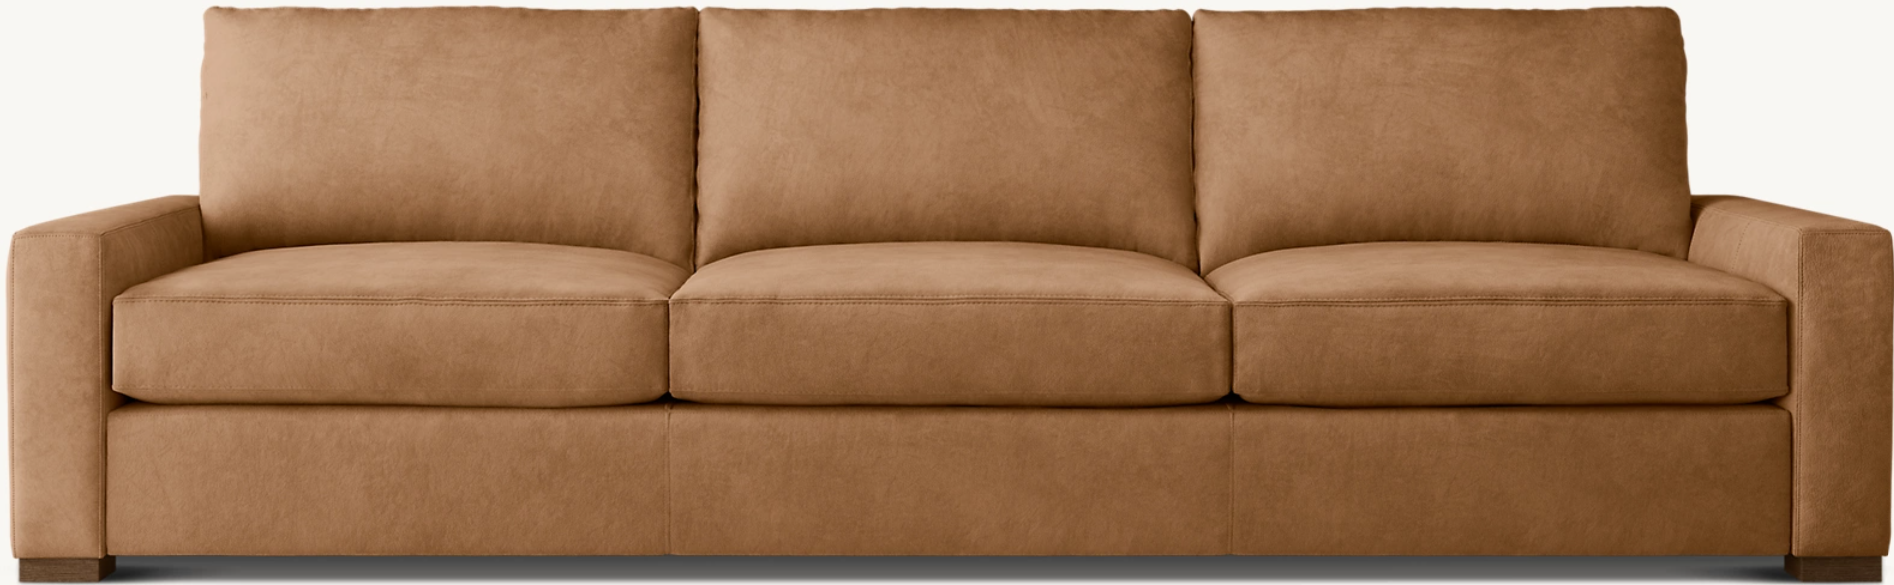 rh-maxwell-sofa